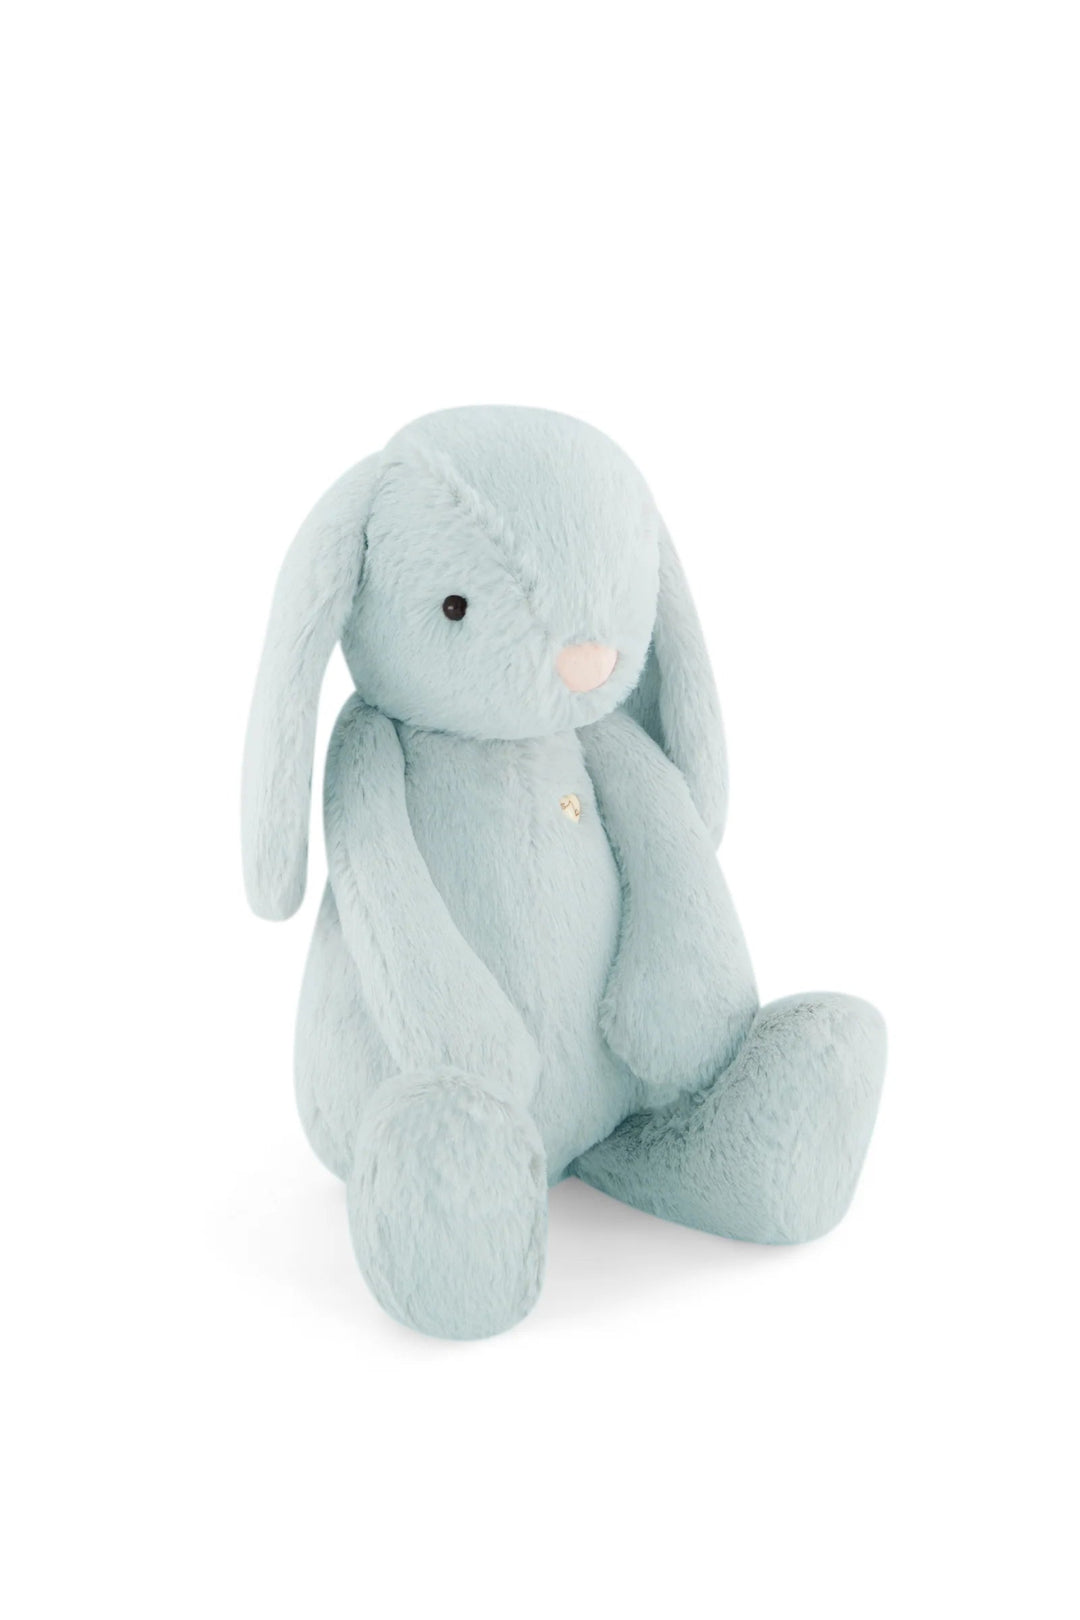 NEW Jamie Kay Snuggle Bunnies - Penelope The Bunny - Sprout - #HolaNanu#NDIS #creativekids